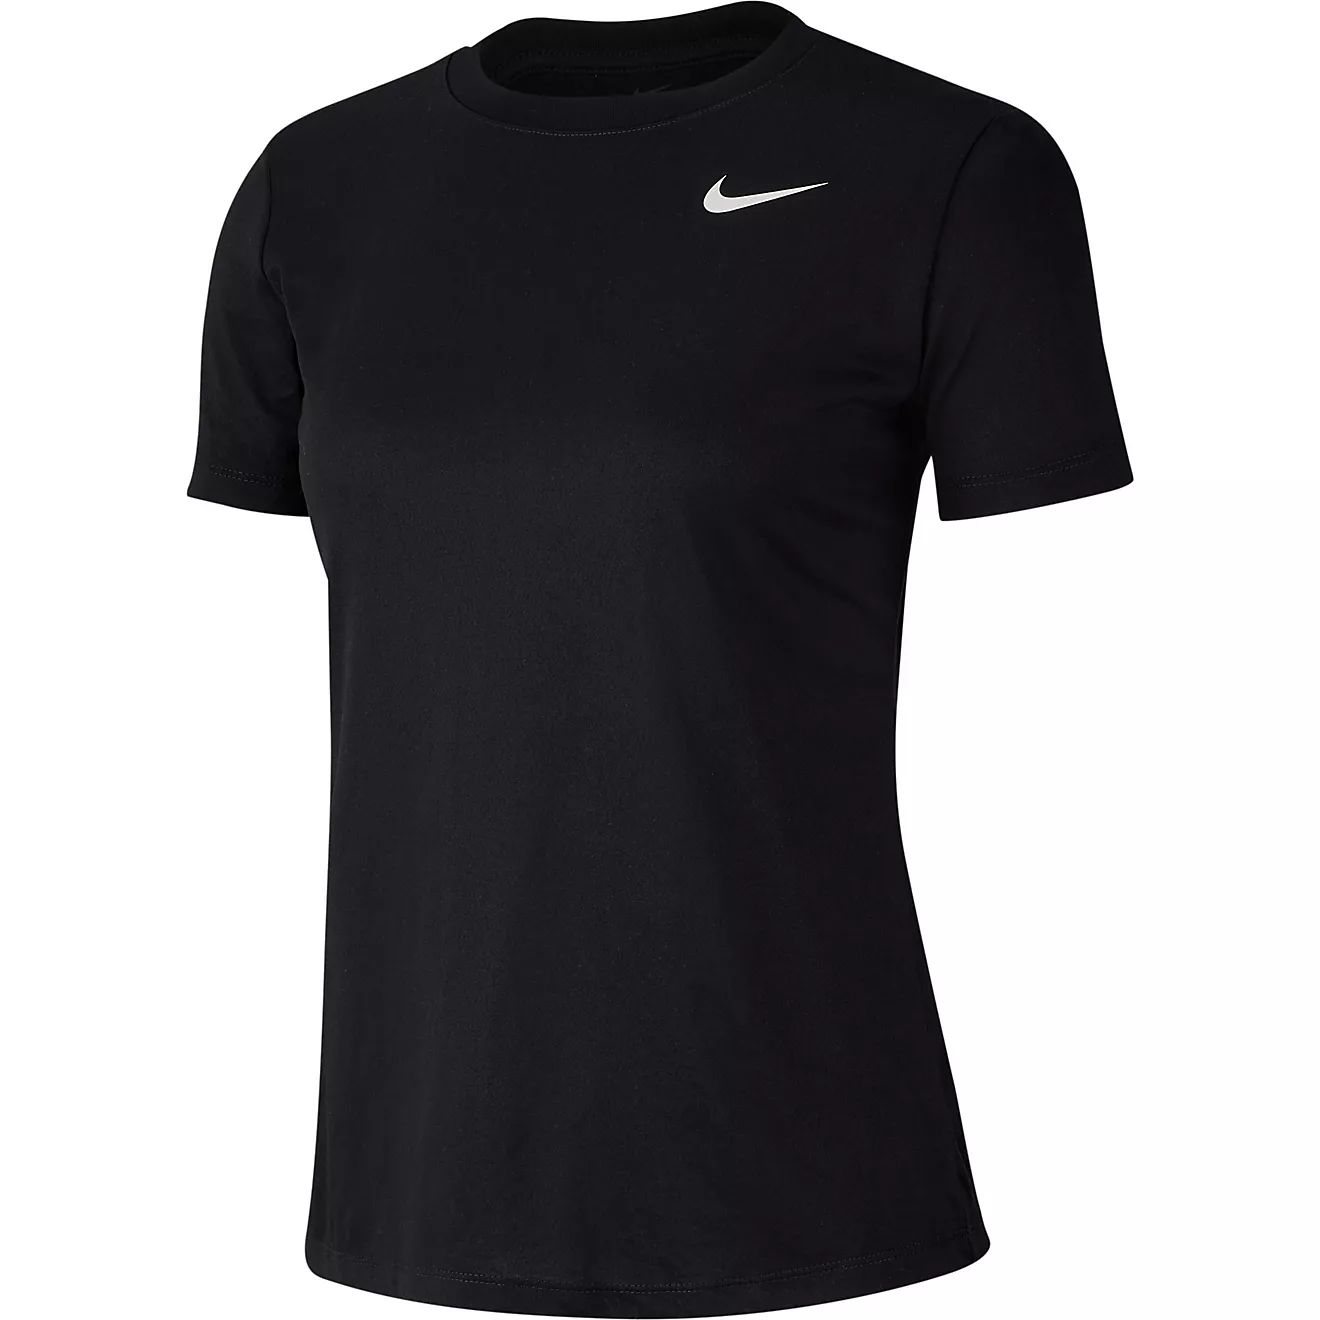 Nike Women's Dry Legend Short Sleeve Training T-shirt | Academy Sports + Outdoors